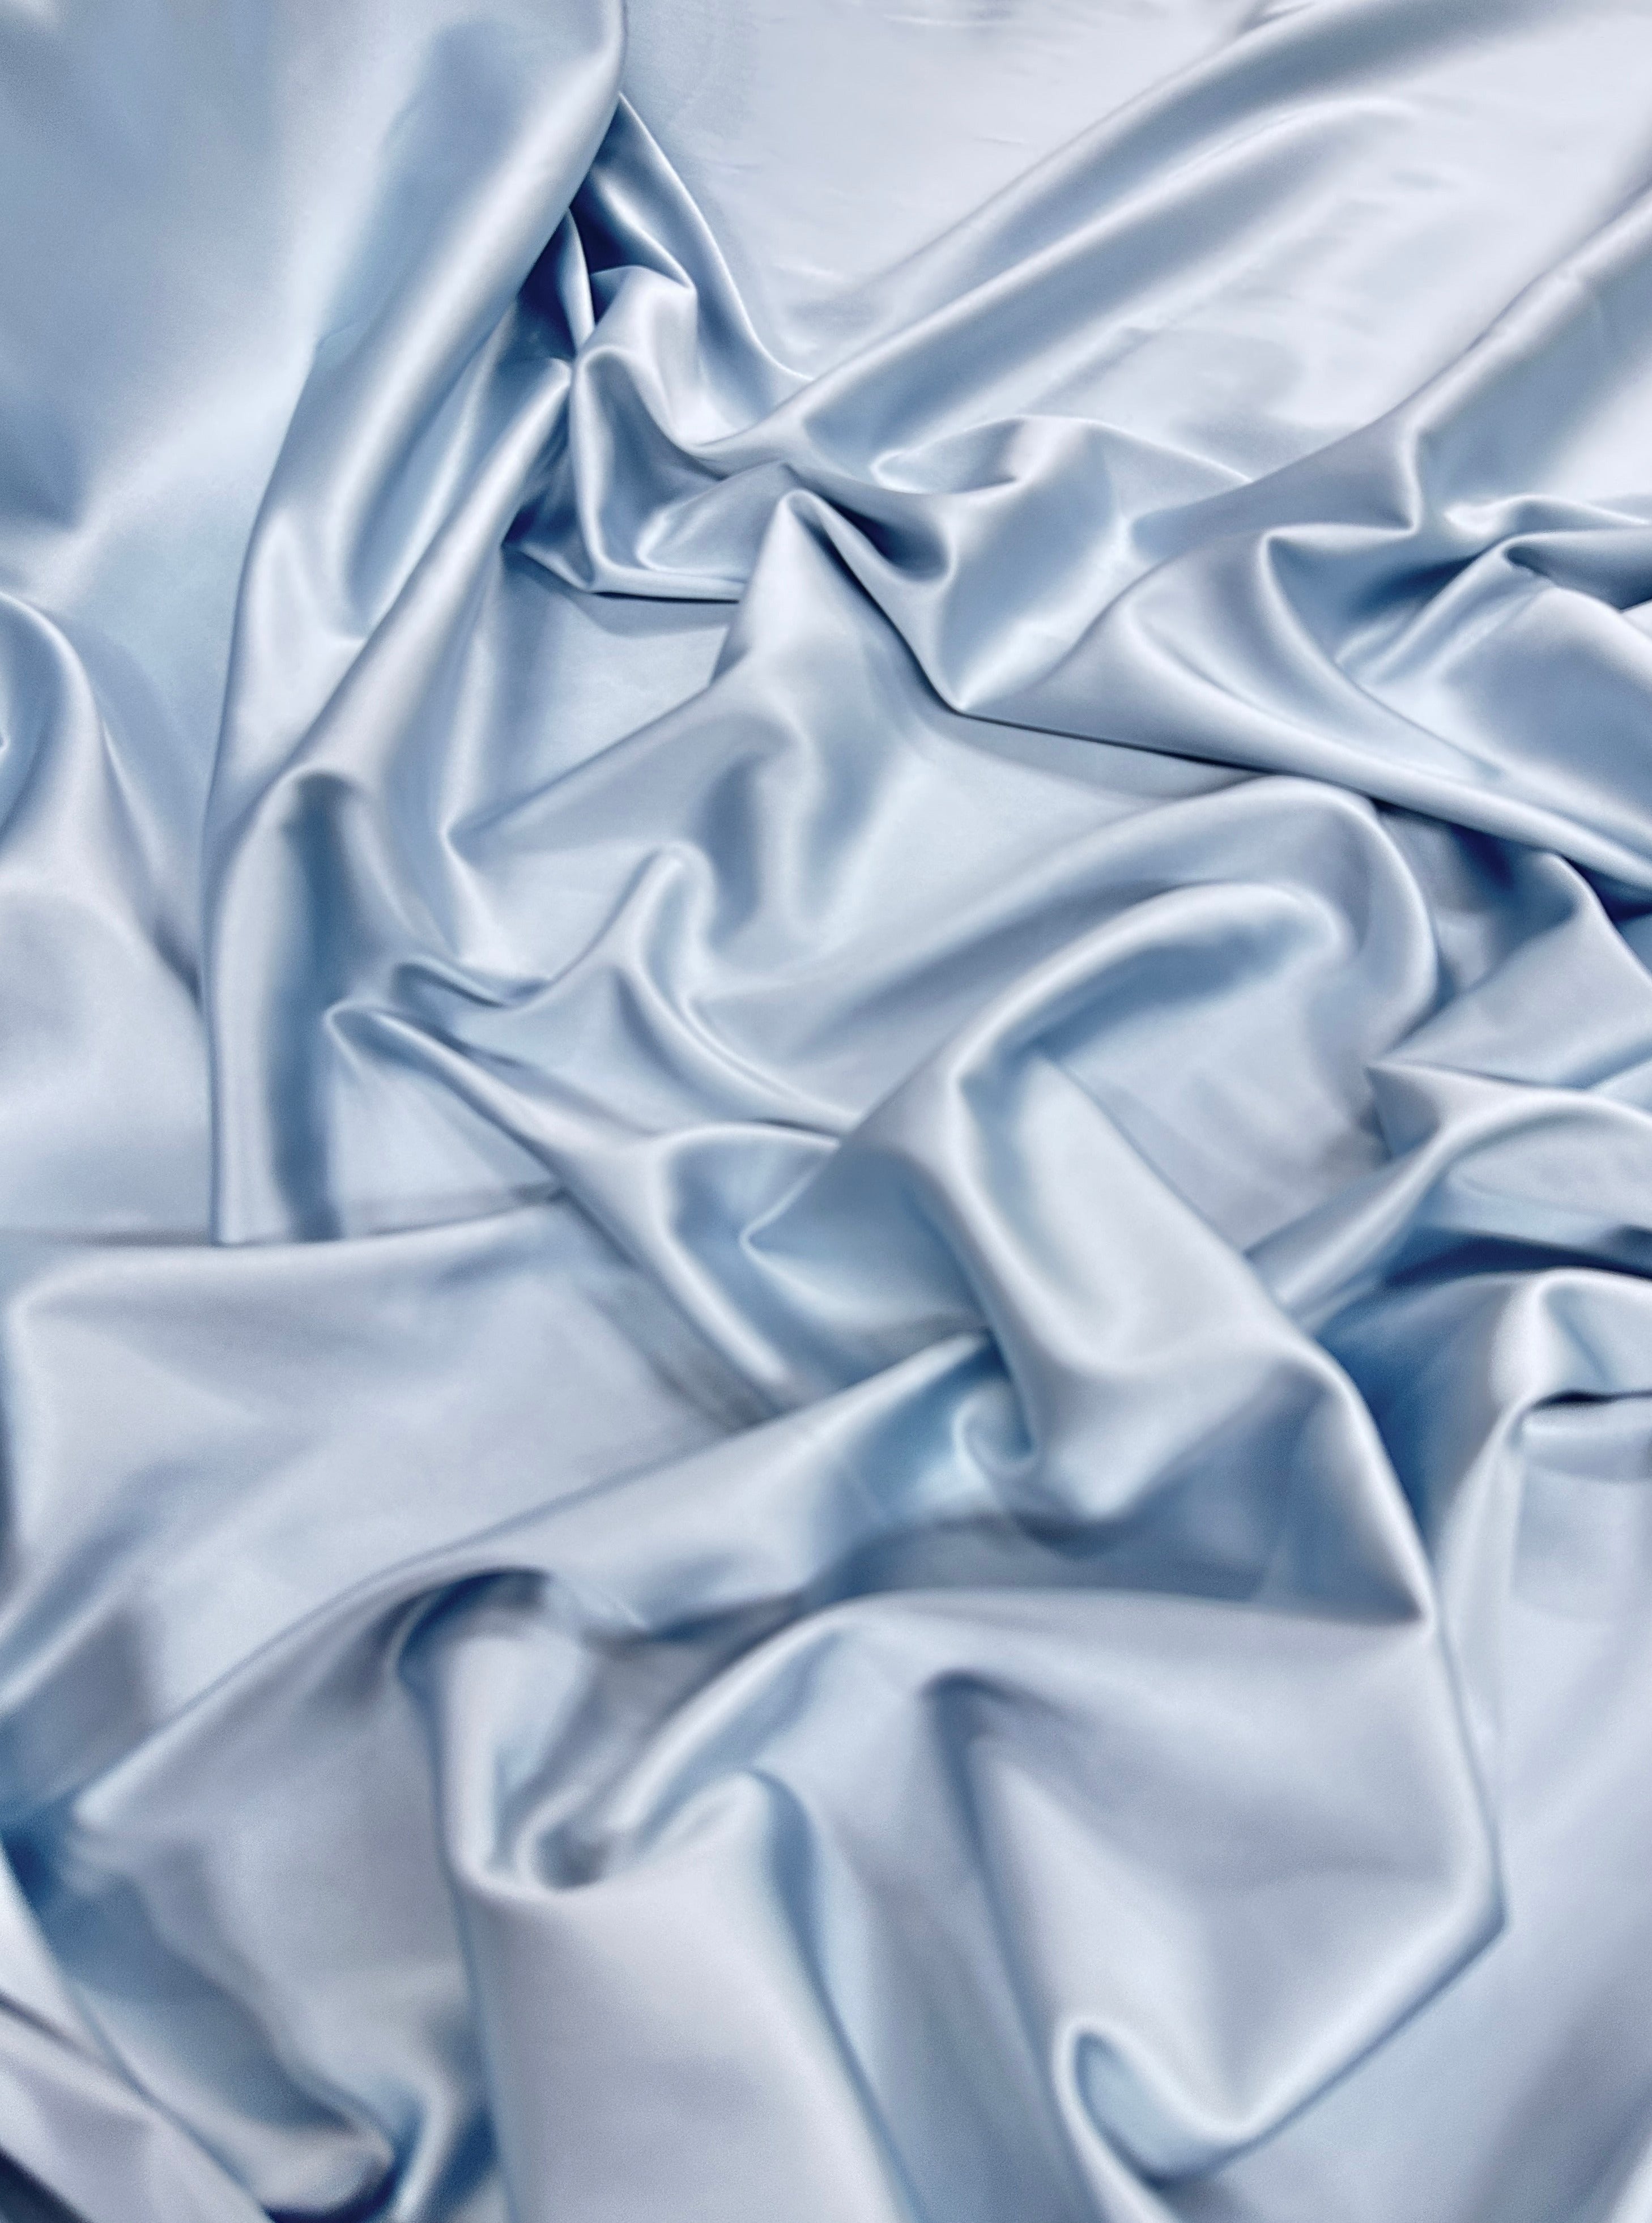 Natural silk, pure silk, 100% pure silk, dusty blue silk, dusty blue natural silk, dusty blue silk satin, dusty blue silk online, light blue silk, baby blue silk, blue silk, natural fabric, kiki textiles, online fabric store usa, luxurious fabric, silk satin online, fancy silk, soft silk, smooth silk, 100% natural silk, charmeuse satin